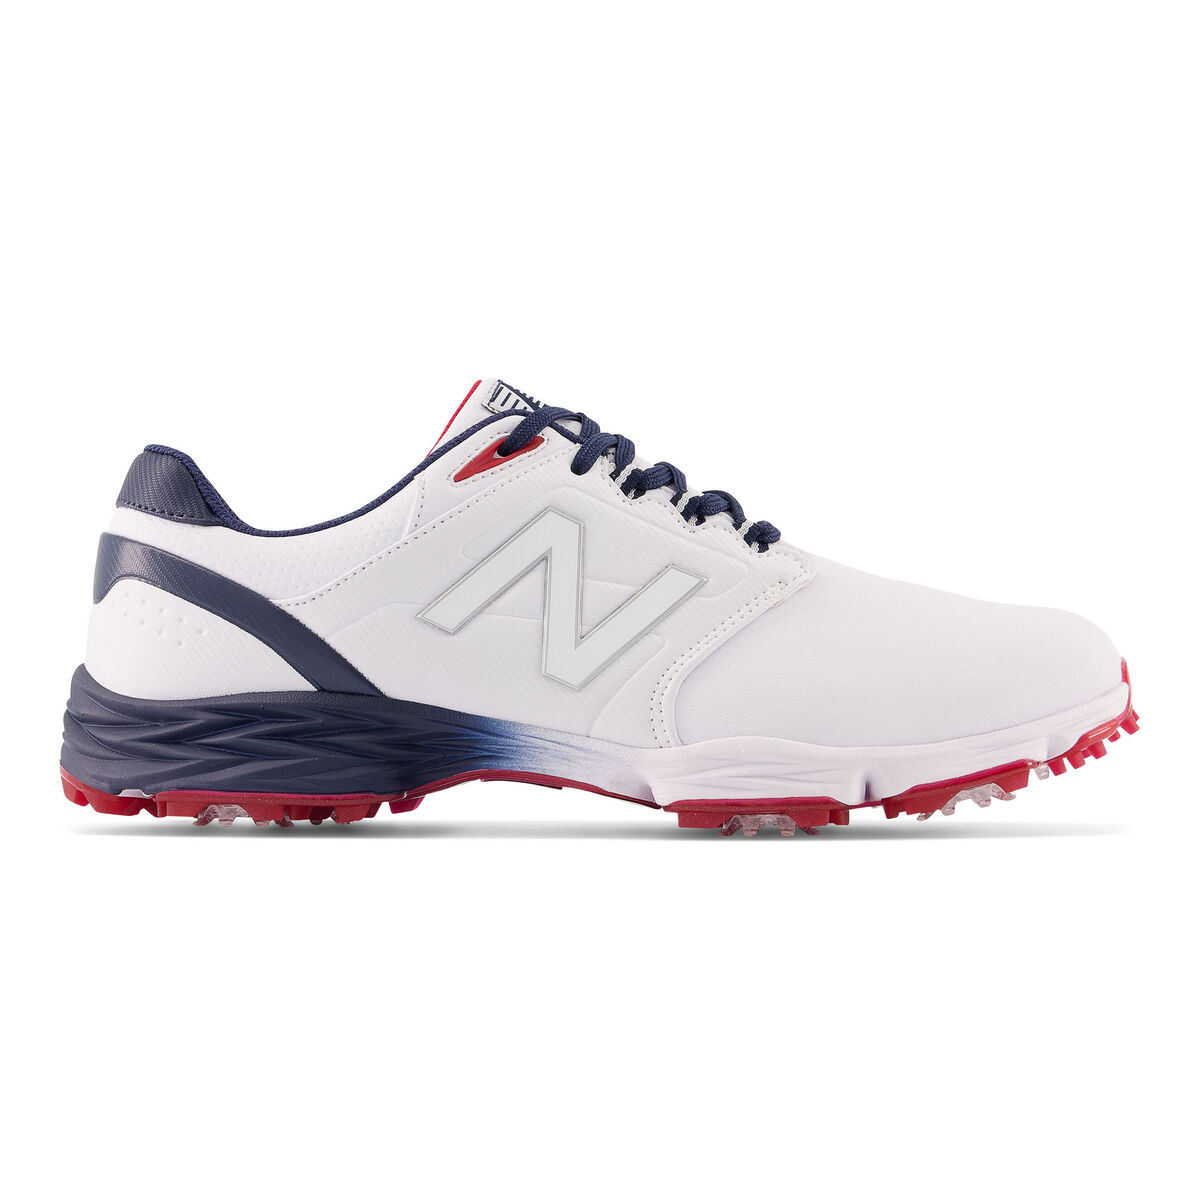 New Balance Striker V3 Men’s Golf Shoe